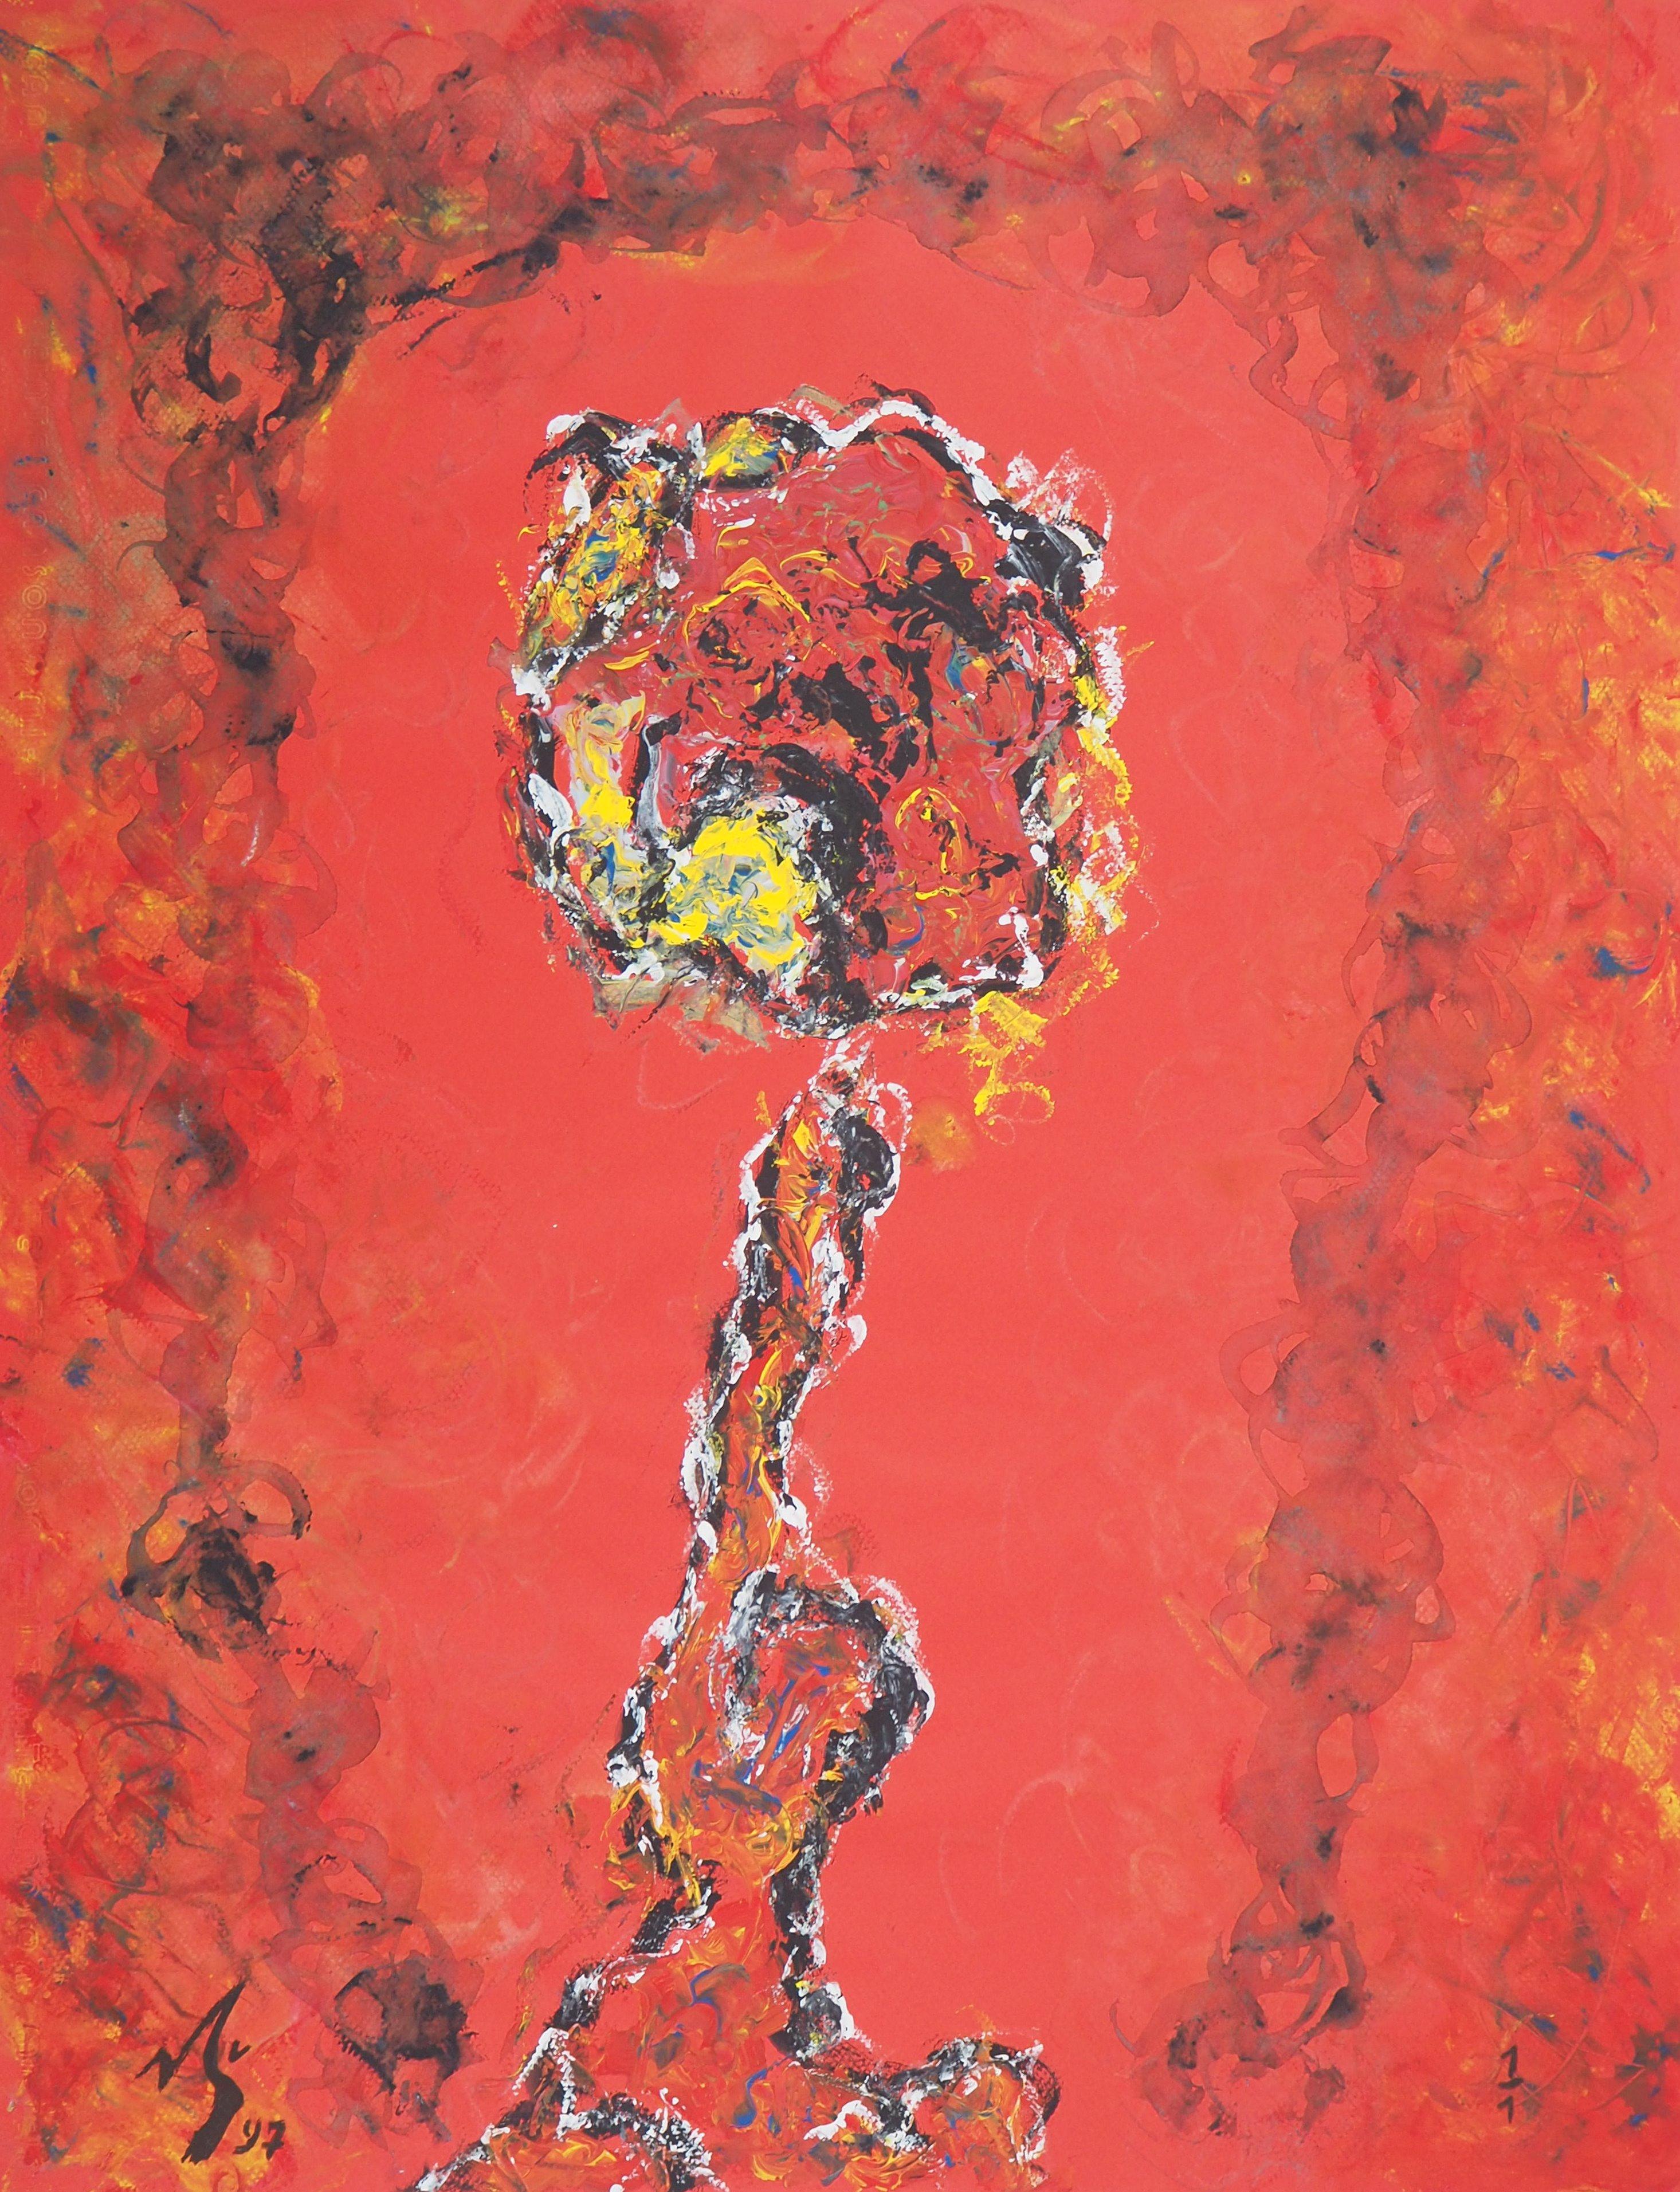 Fauvist rose - original hand signed gouache painting, 1997